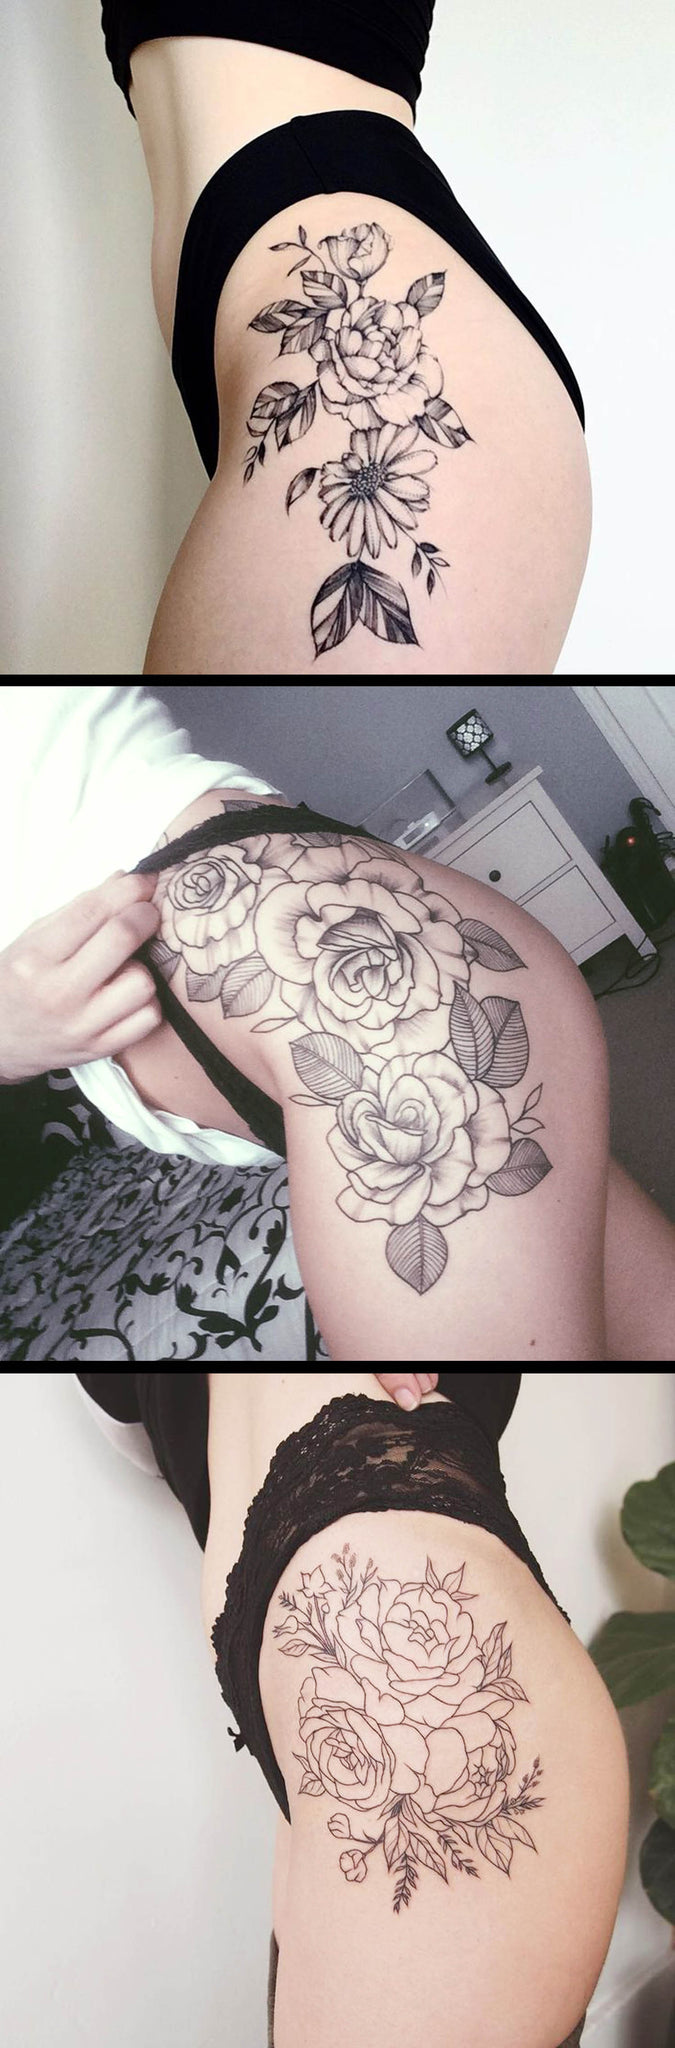 Vintage Black and White Floral Flower Hip Tattoo Ideas for Women - Realistic Wild Rose Thigh Tat -  tatuaje de cadera de flor - www.MyBodiArt.com  